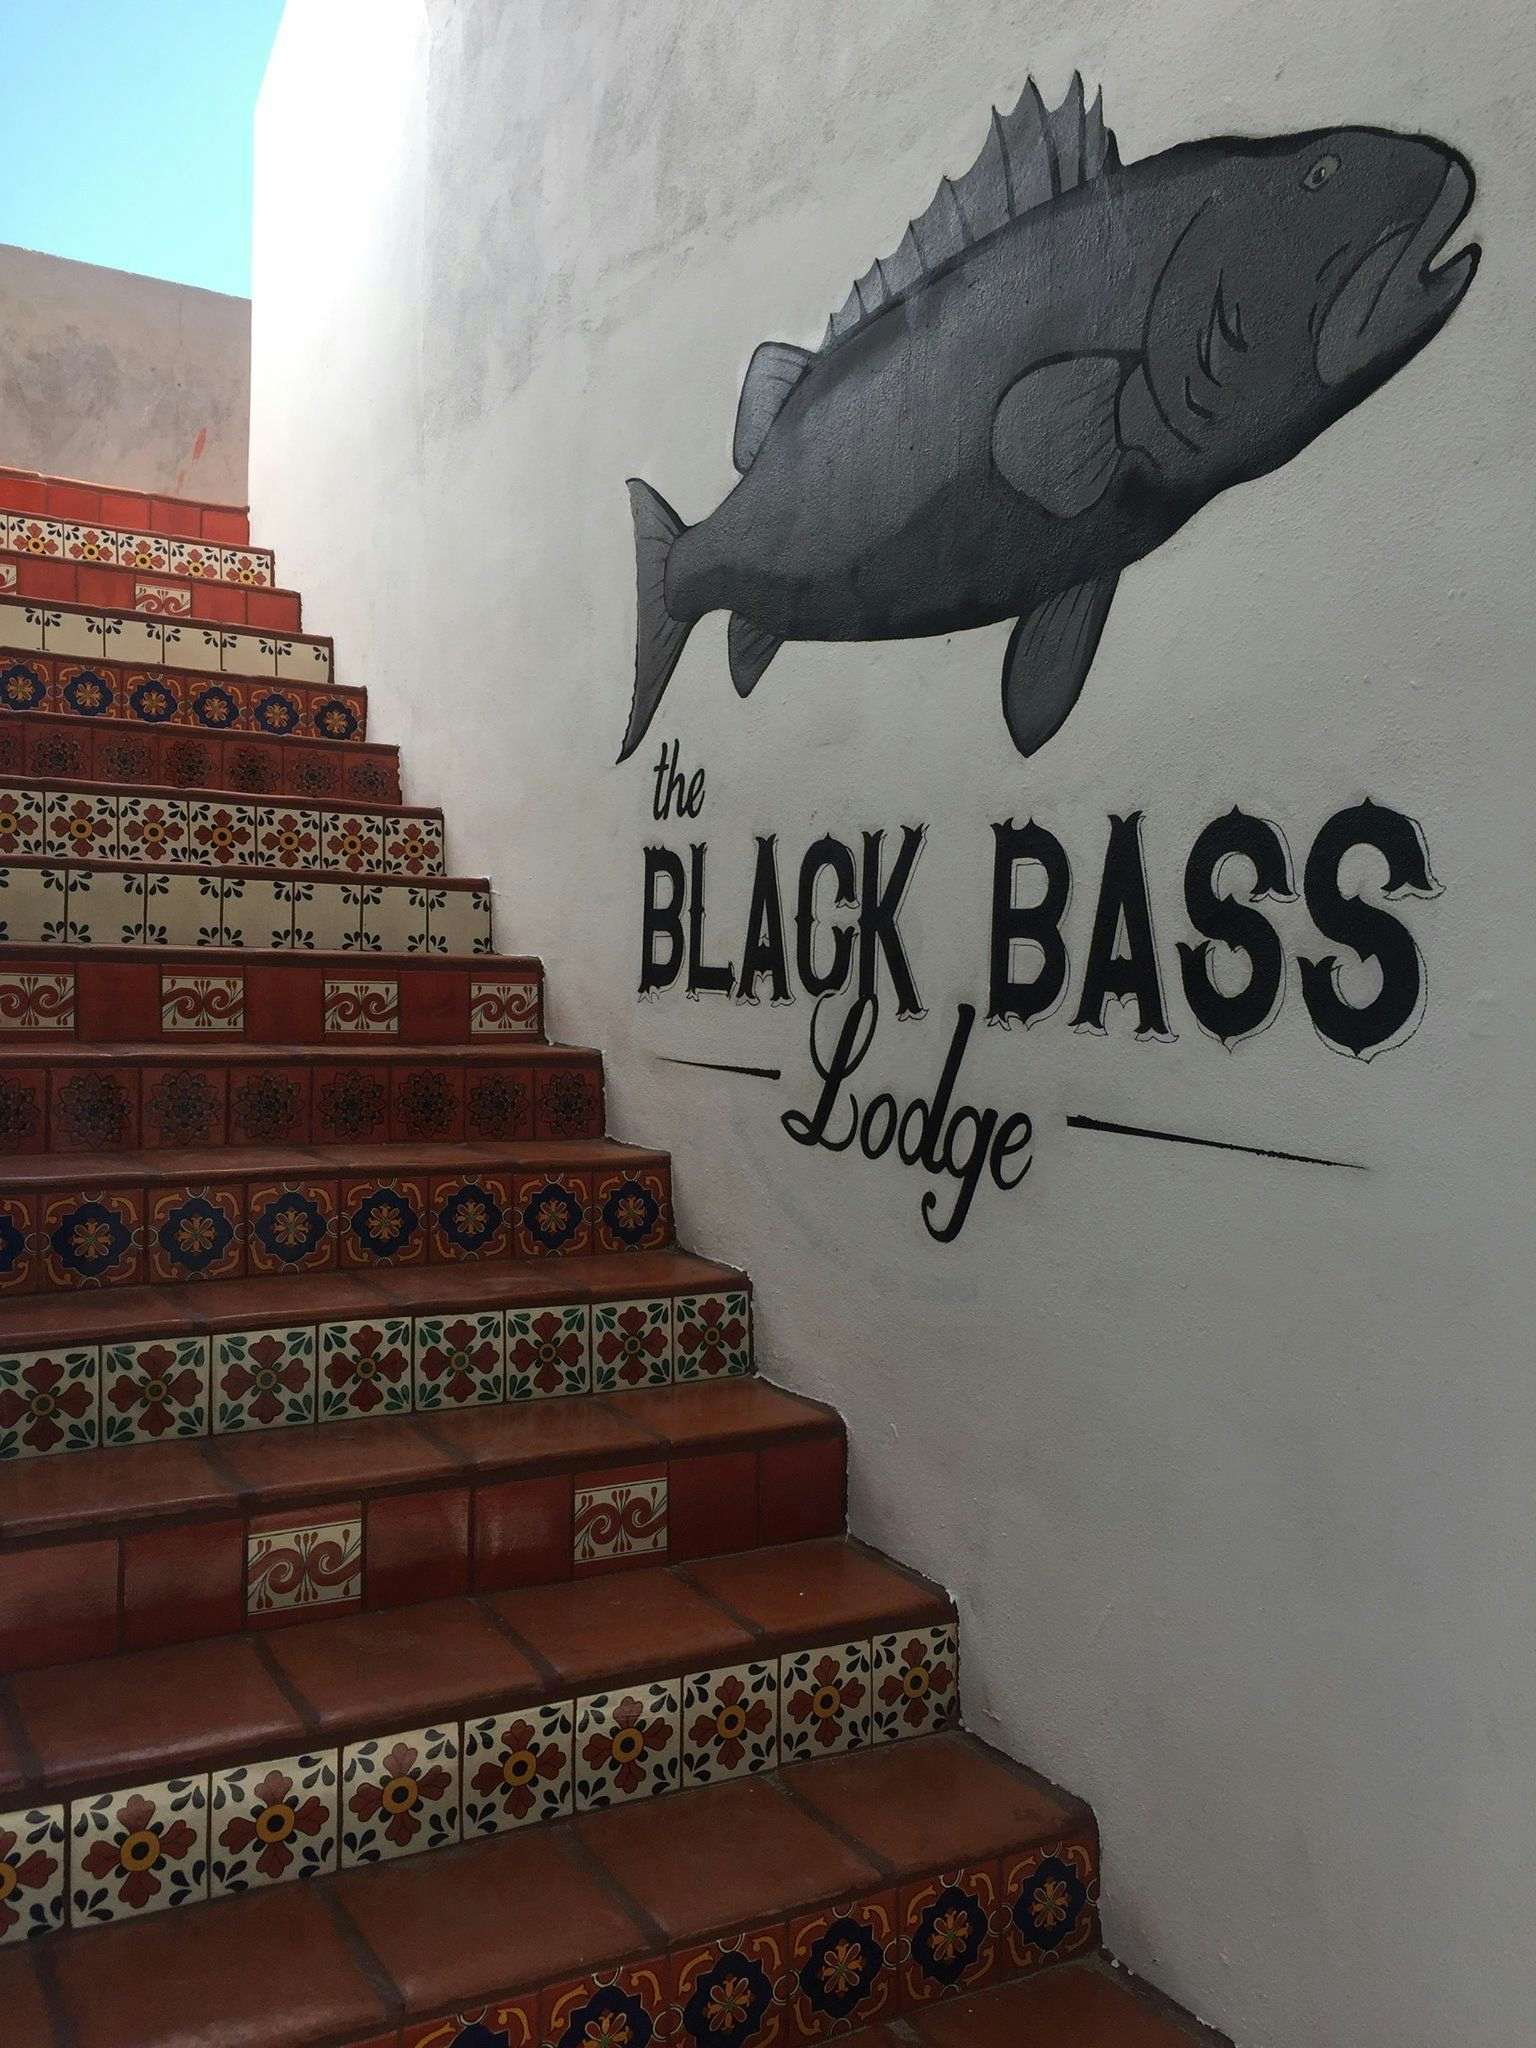 The Black Bass Lodge